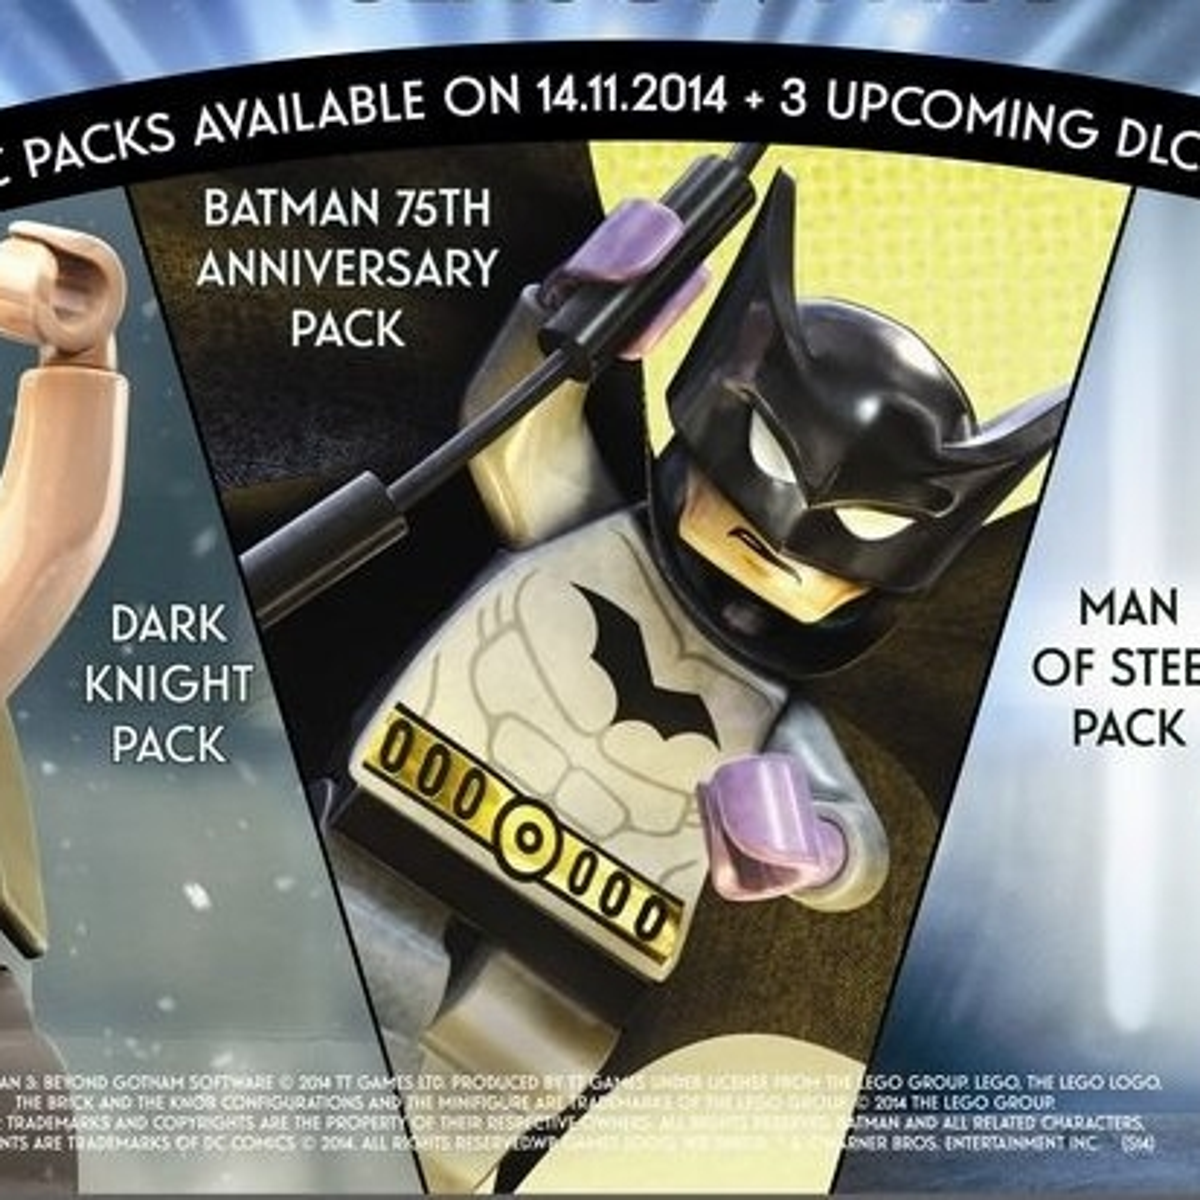 Lego Batman 3: Gotham Lego game to get a season pass Eurogamer.net